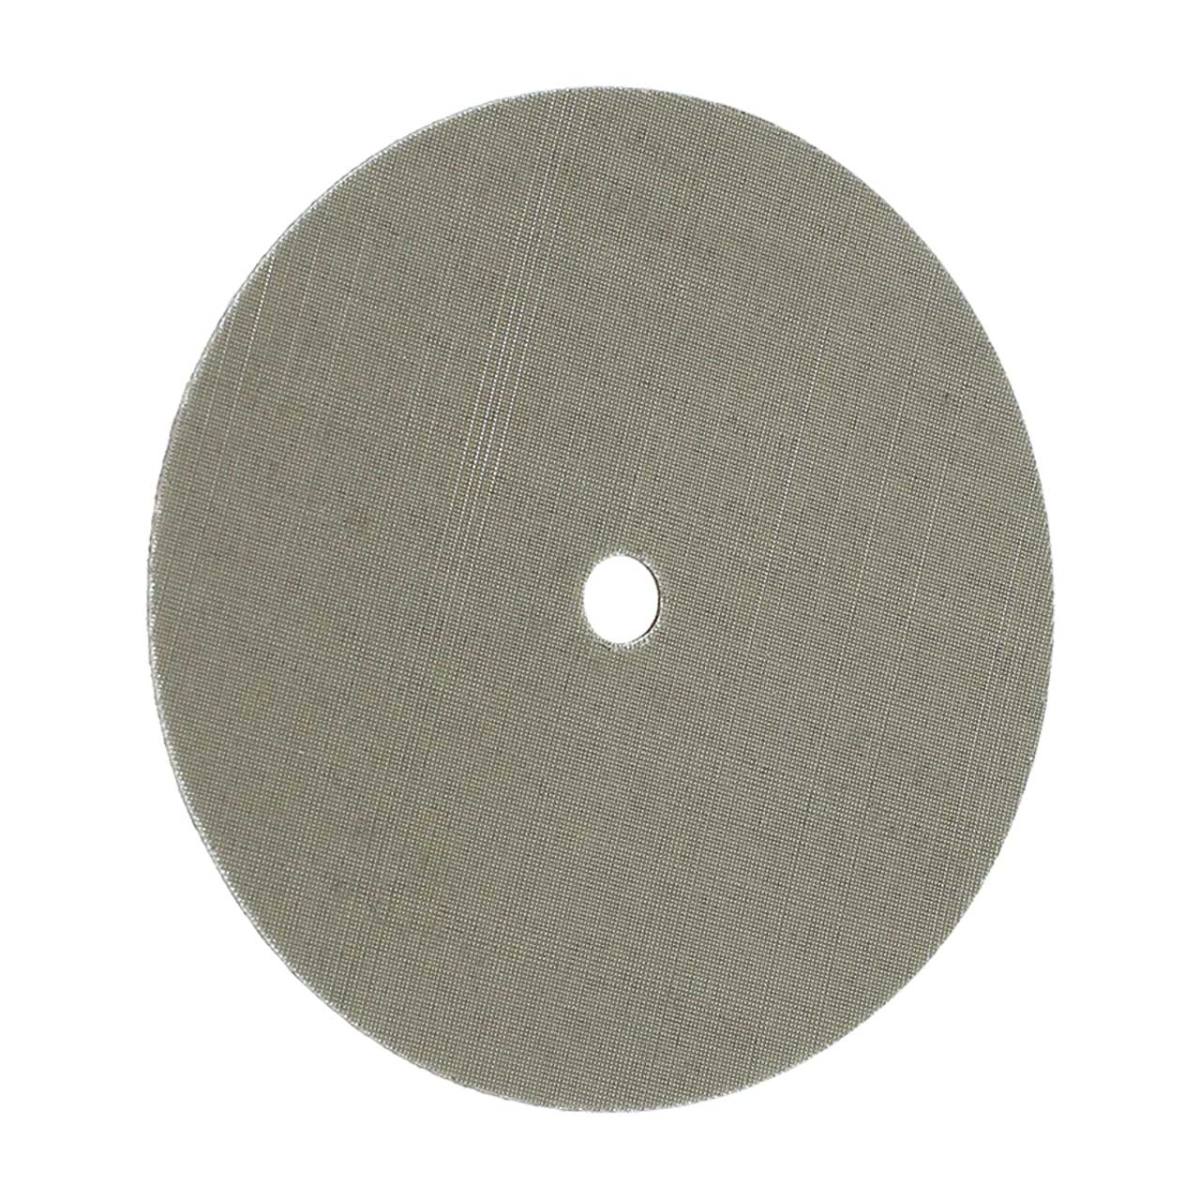 FIX KLETT Trizact disk, 115 mm x 10 mm, grain 220 / A 100, Velcro